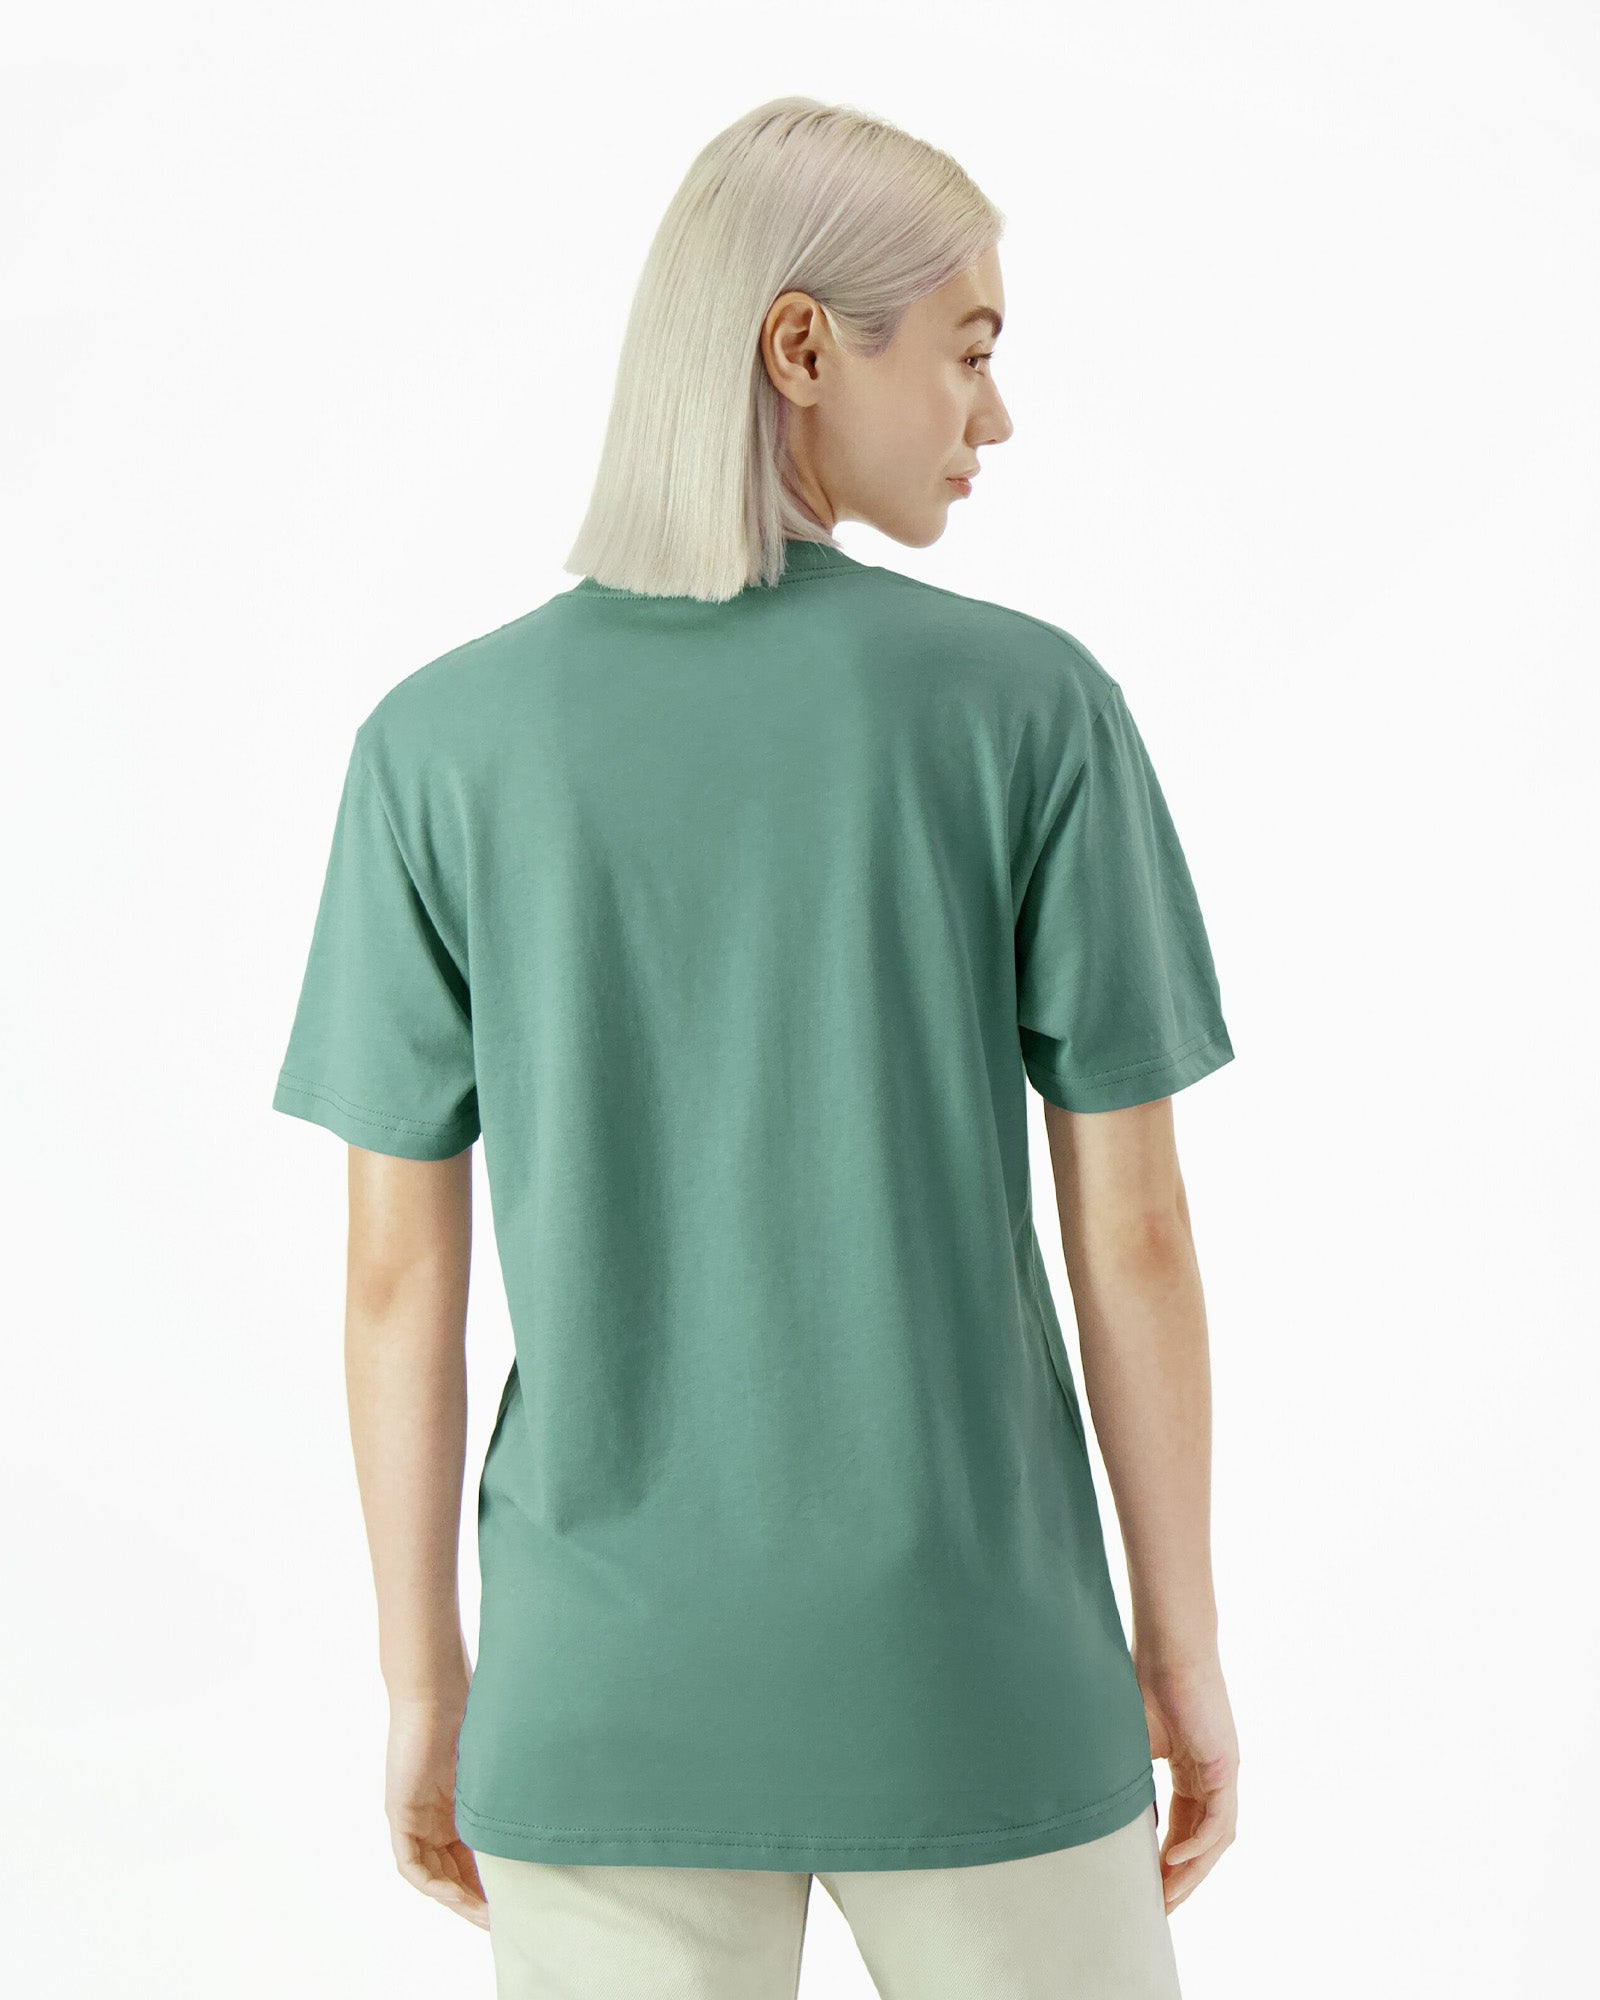 Sueded Unisex Short Sleeve T-shirt - Arctic